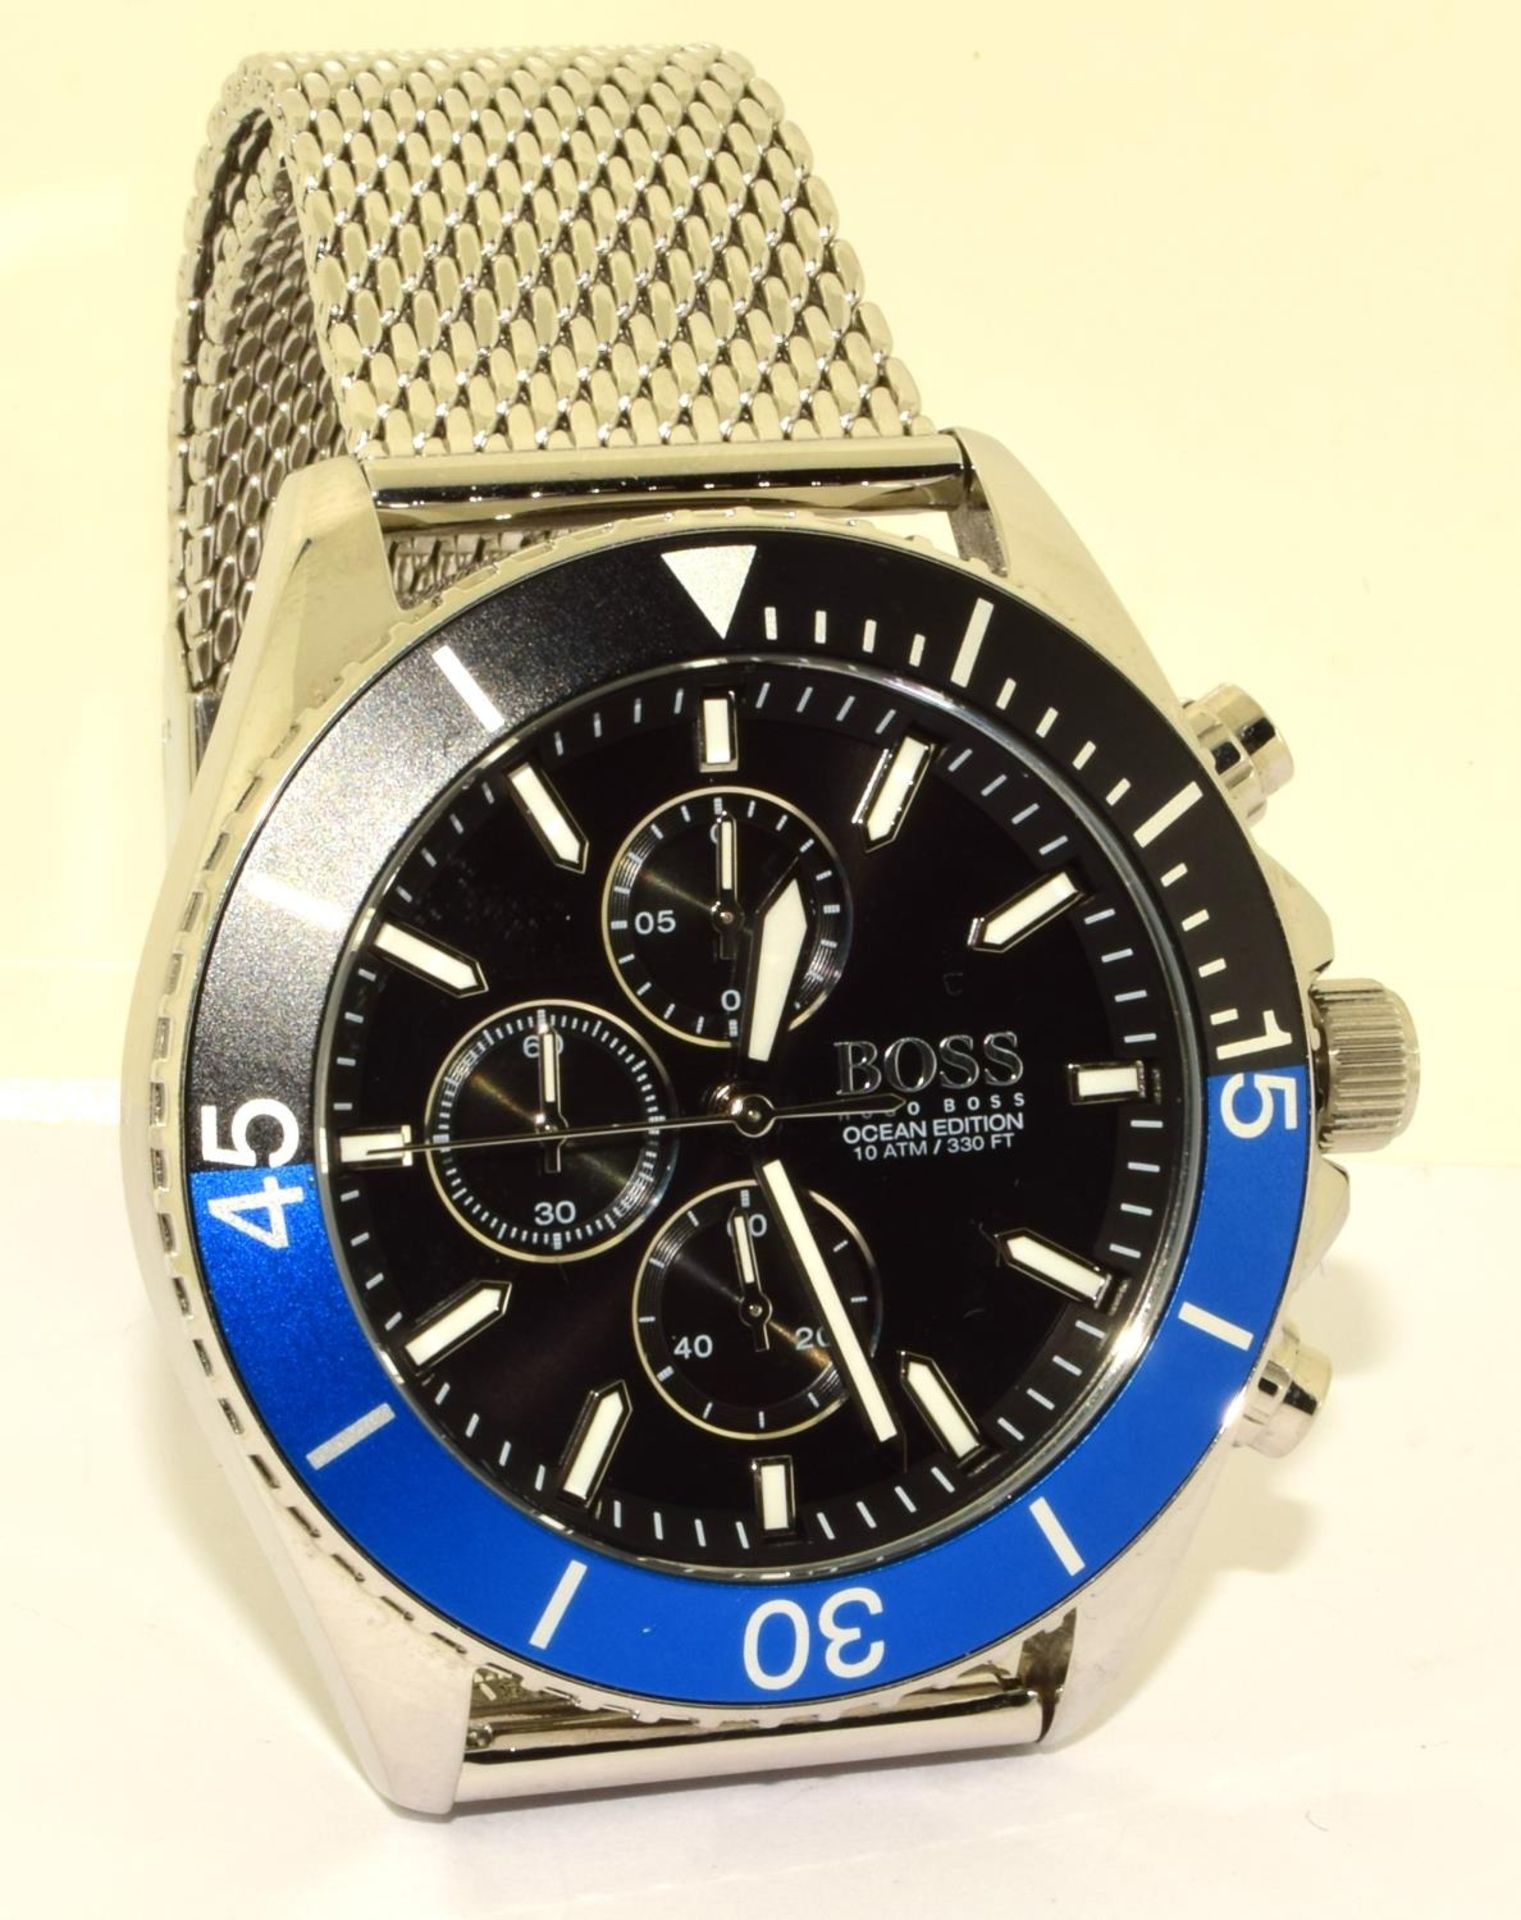 Boss ocean Edition chronograph fashion watch ref 22 - Image 6 of 6